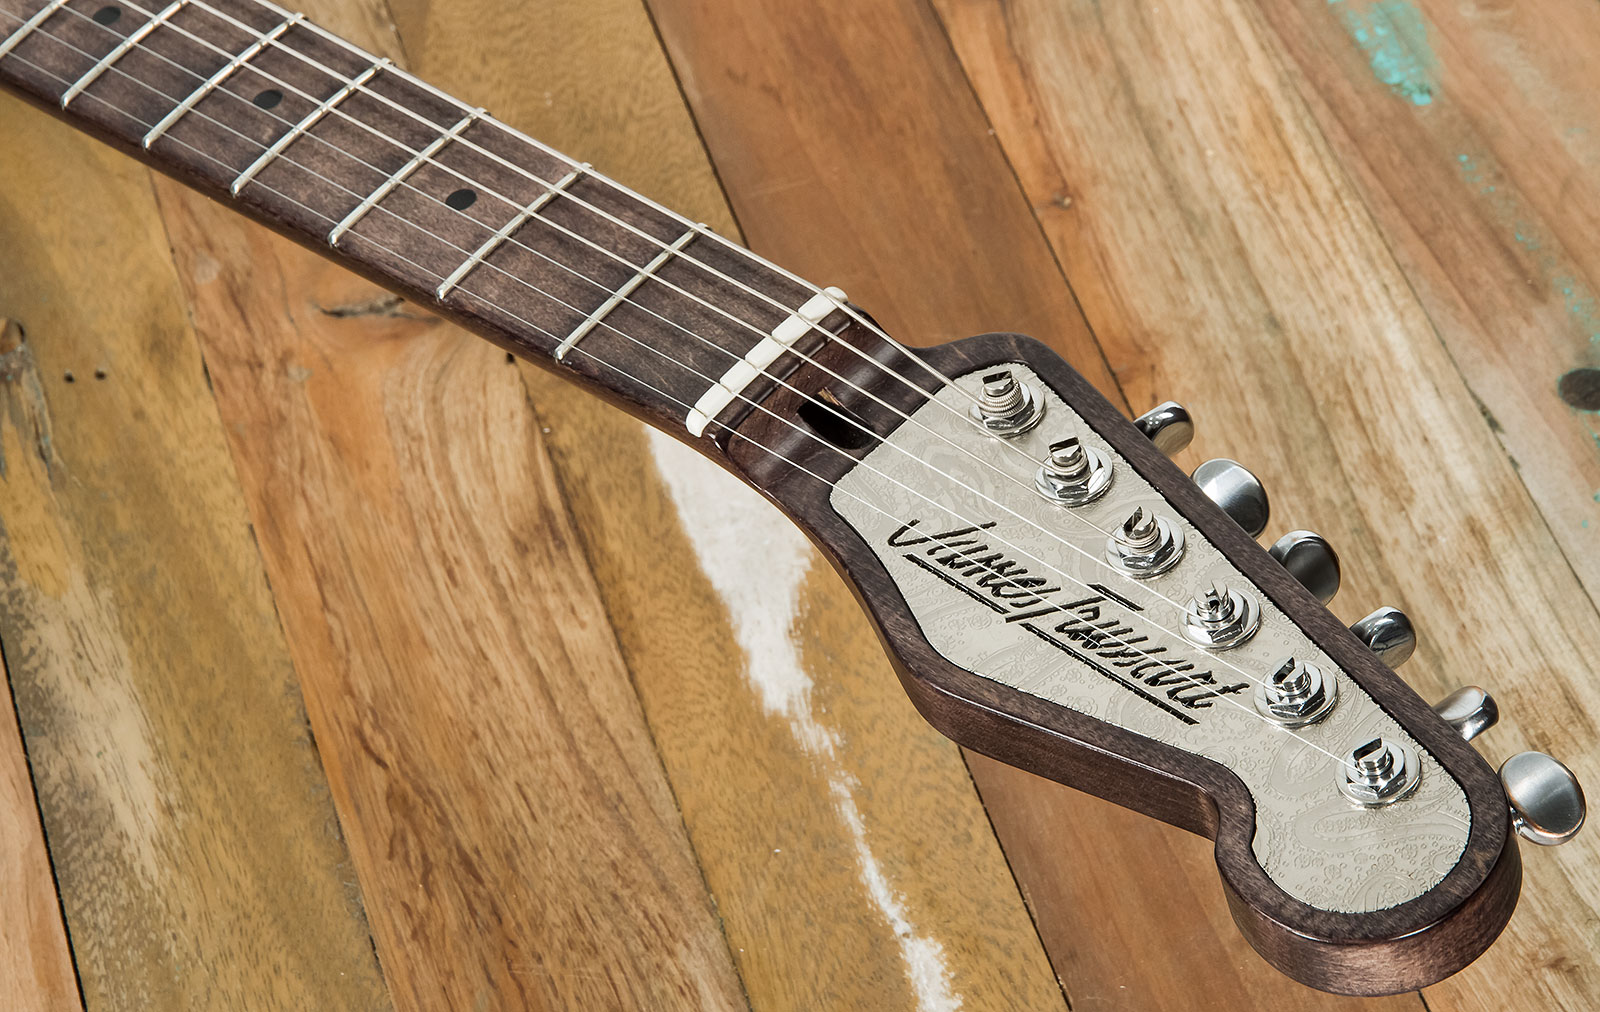 James Trussart Deluxe Steelcaster Perf.back P90h Bigsby Mn #21132 - Antique Silver Paisley Engraved Satin Black - Televorm elektrische gitaar - Variat